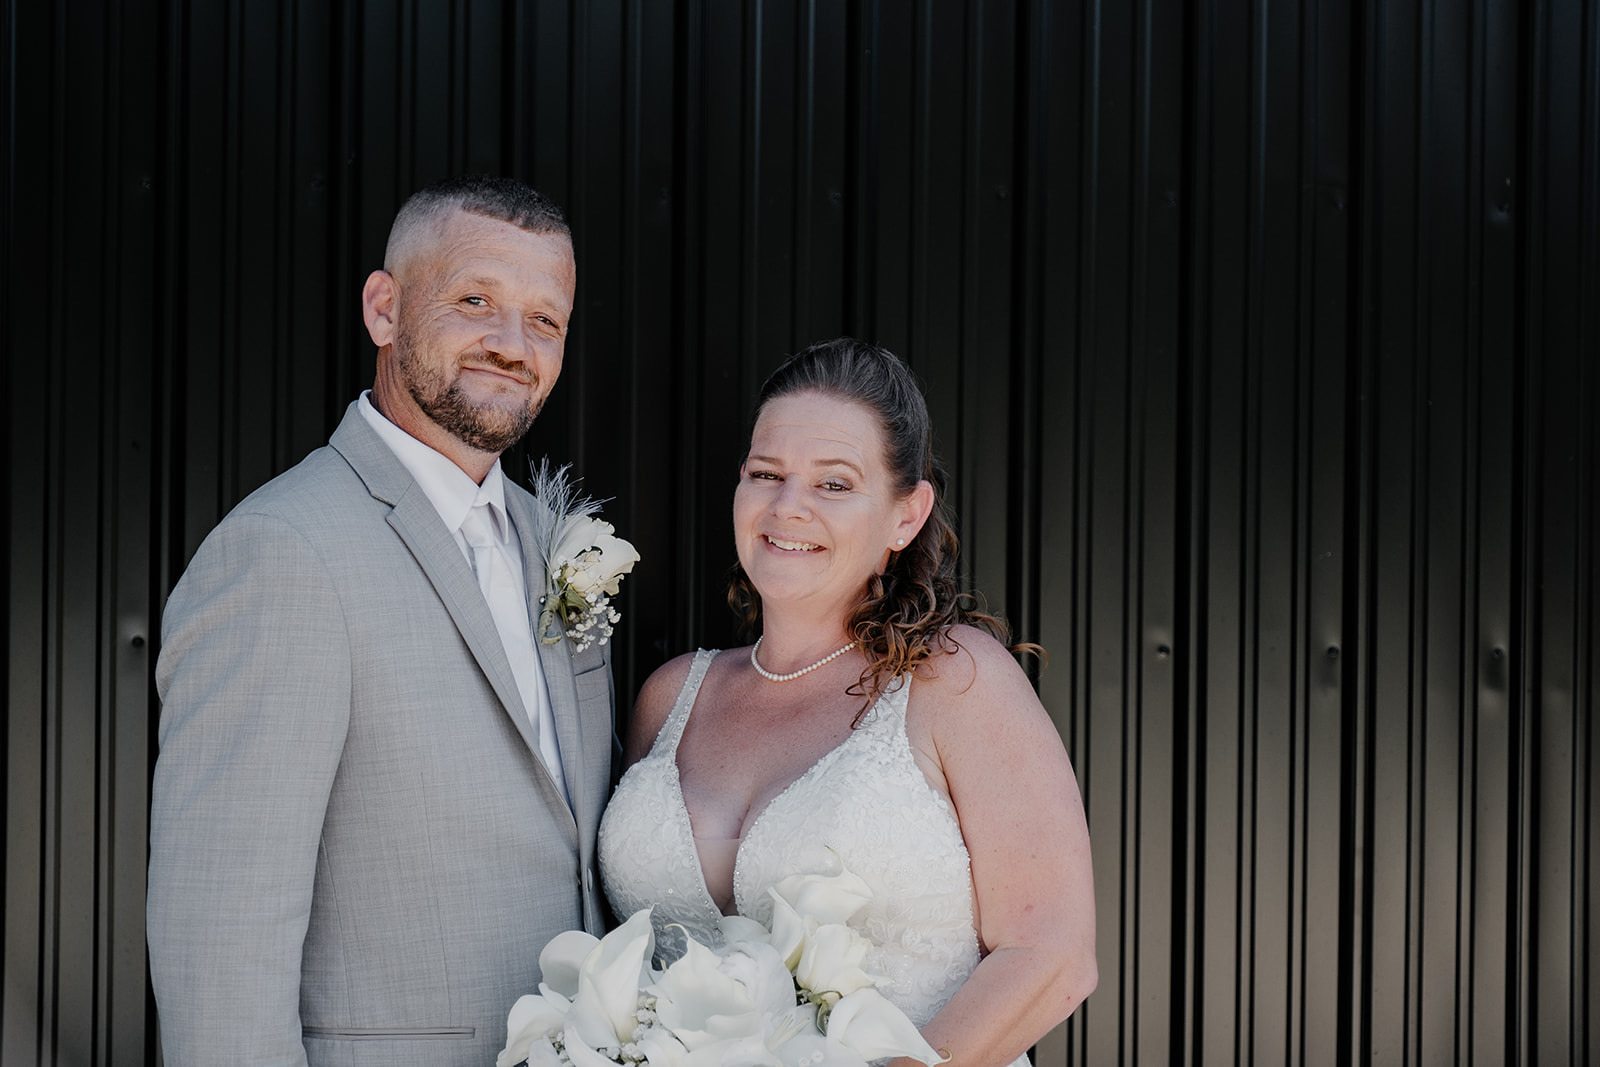 Stefanie & Richard married at Willowbrook Weddings in Bridgeville, DE